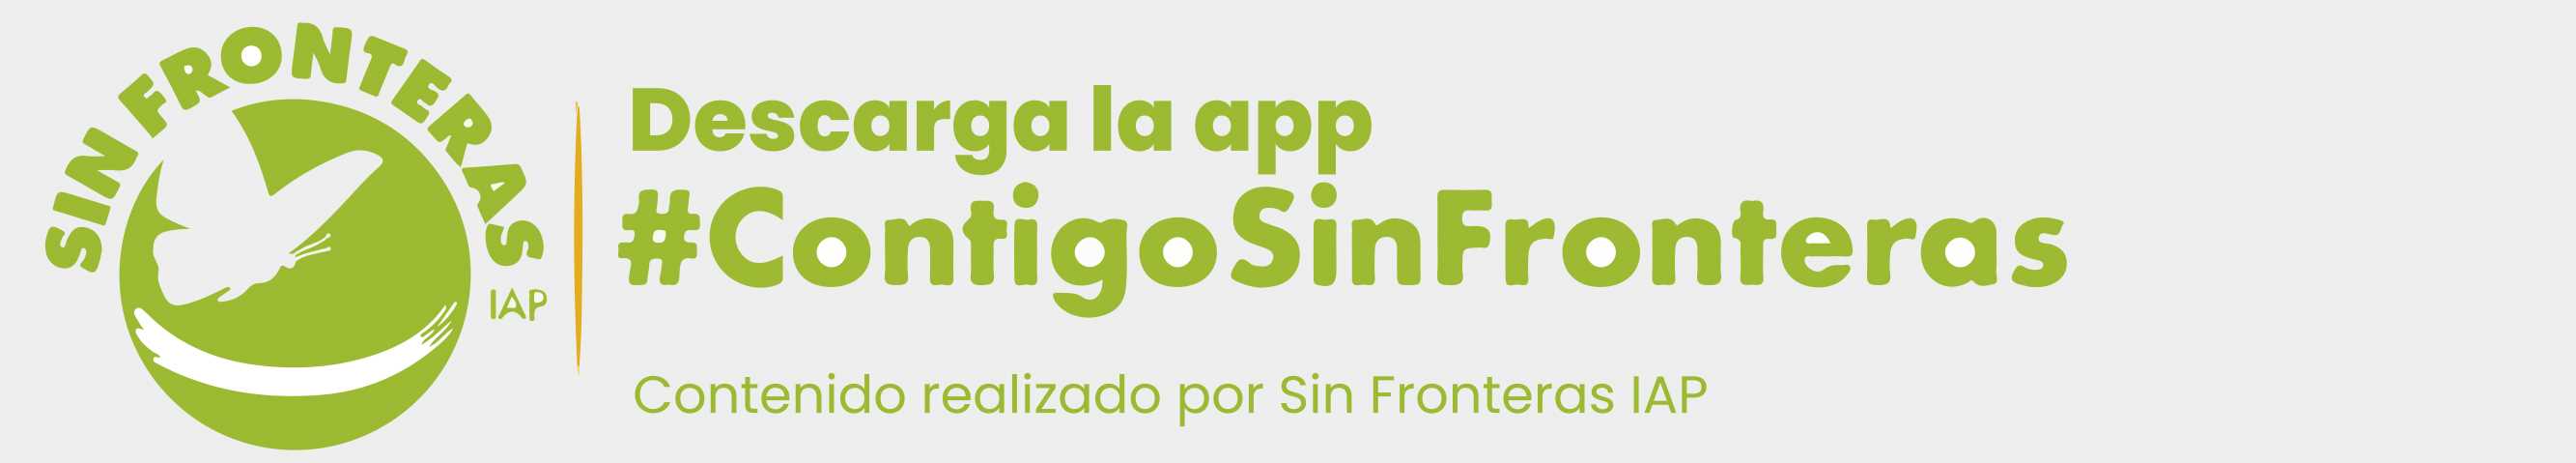 App Contigo Sin Fronteras IAP.jpg